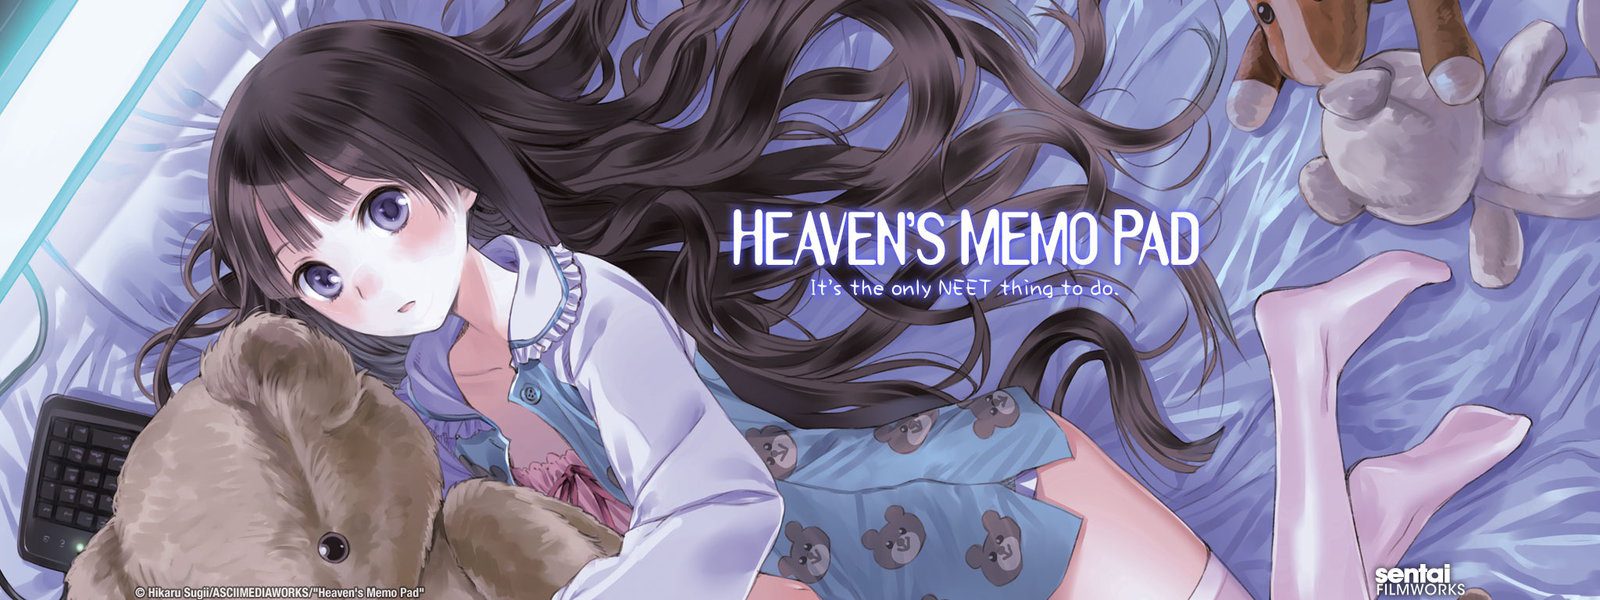 Heaven's Memo Pad by Kishida Mel